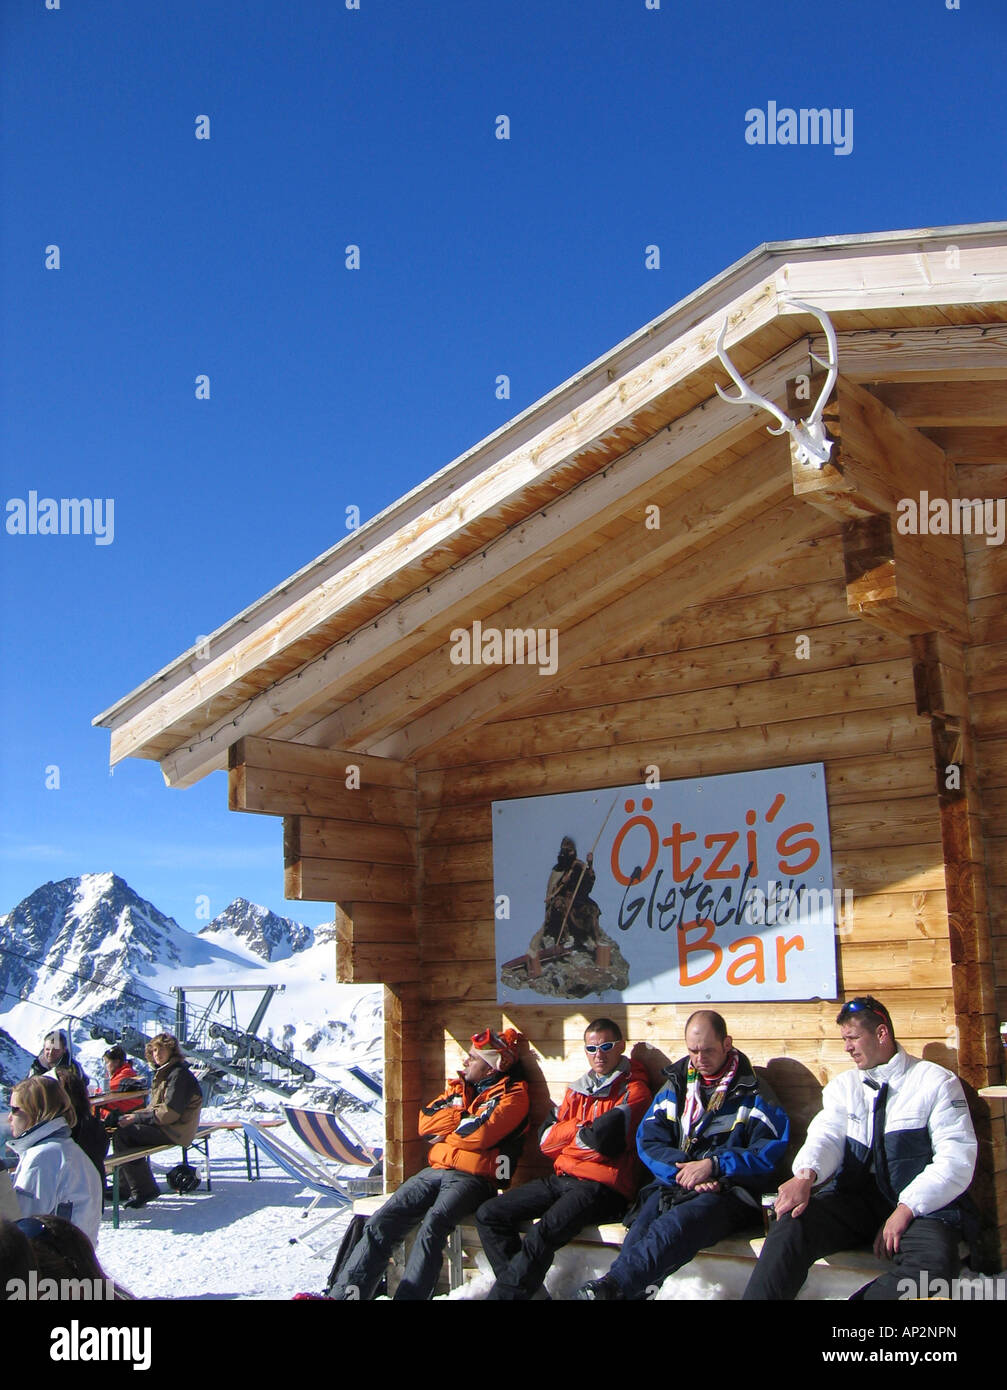 Four people sitting outside an alpine hut, Oetzis Gletscherbar, Schnalstal, South Tyrol, Italy Stock Photo